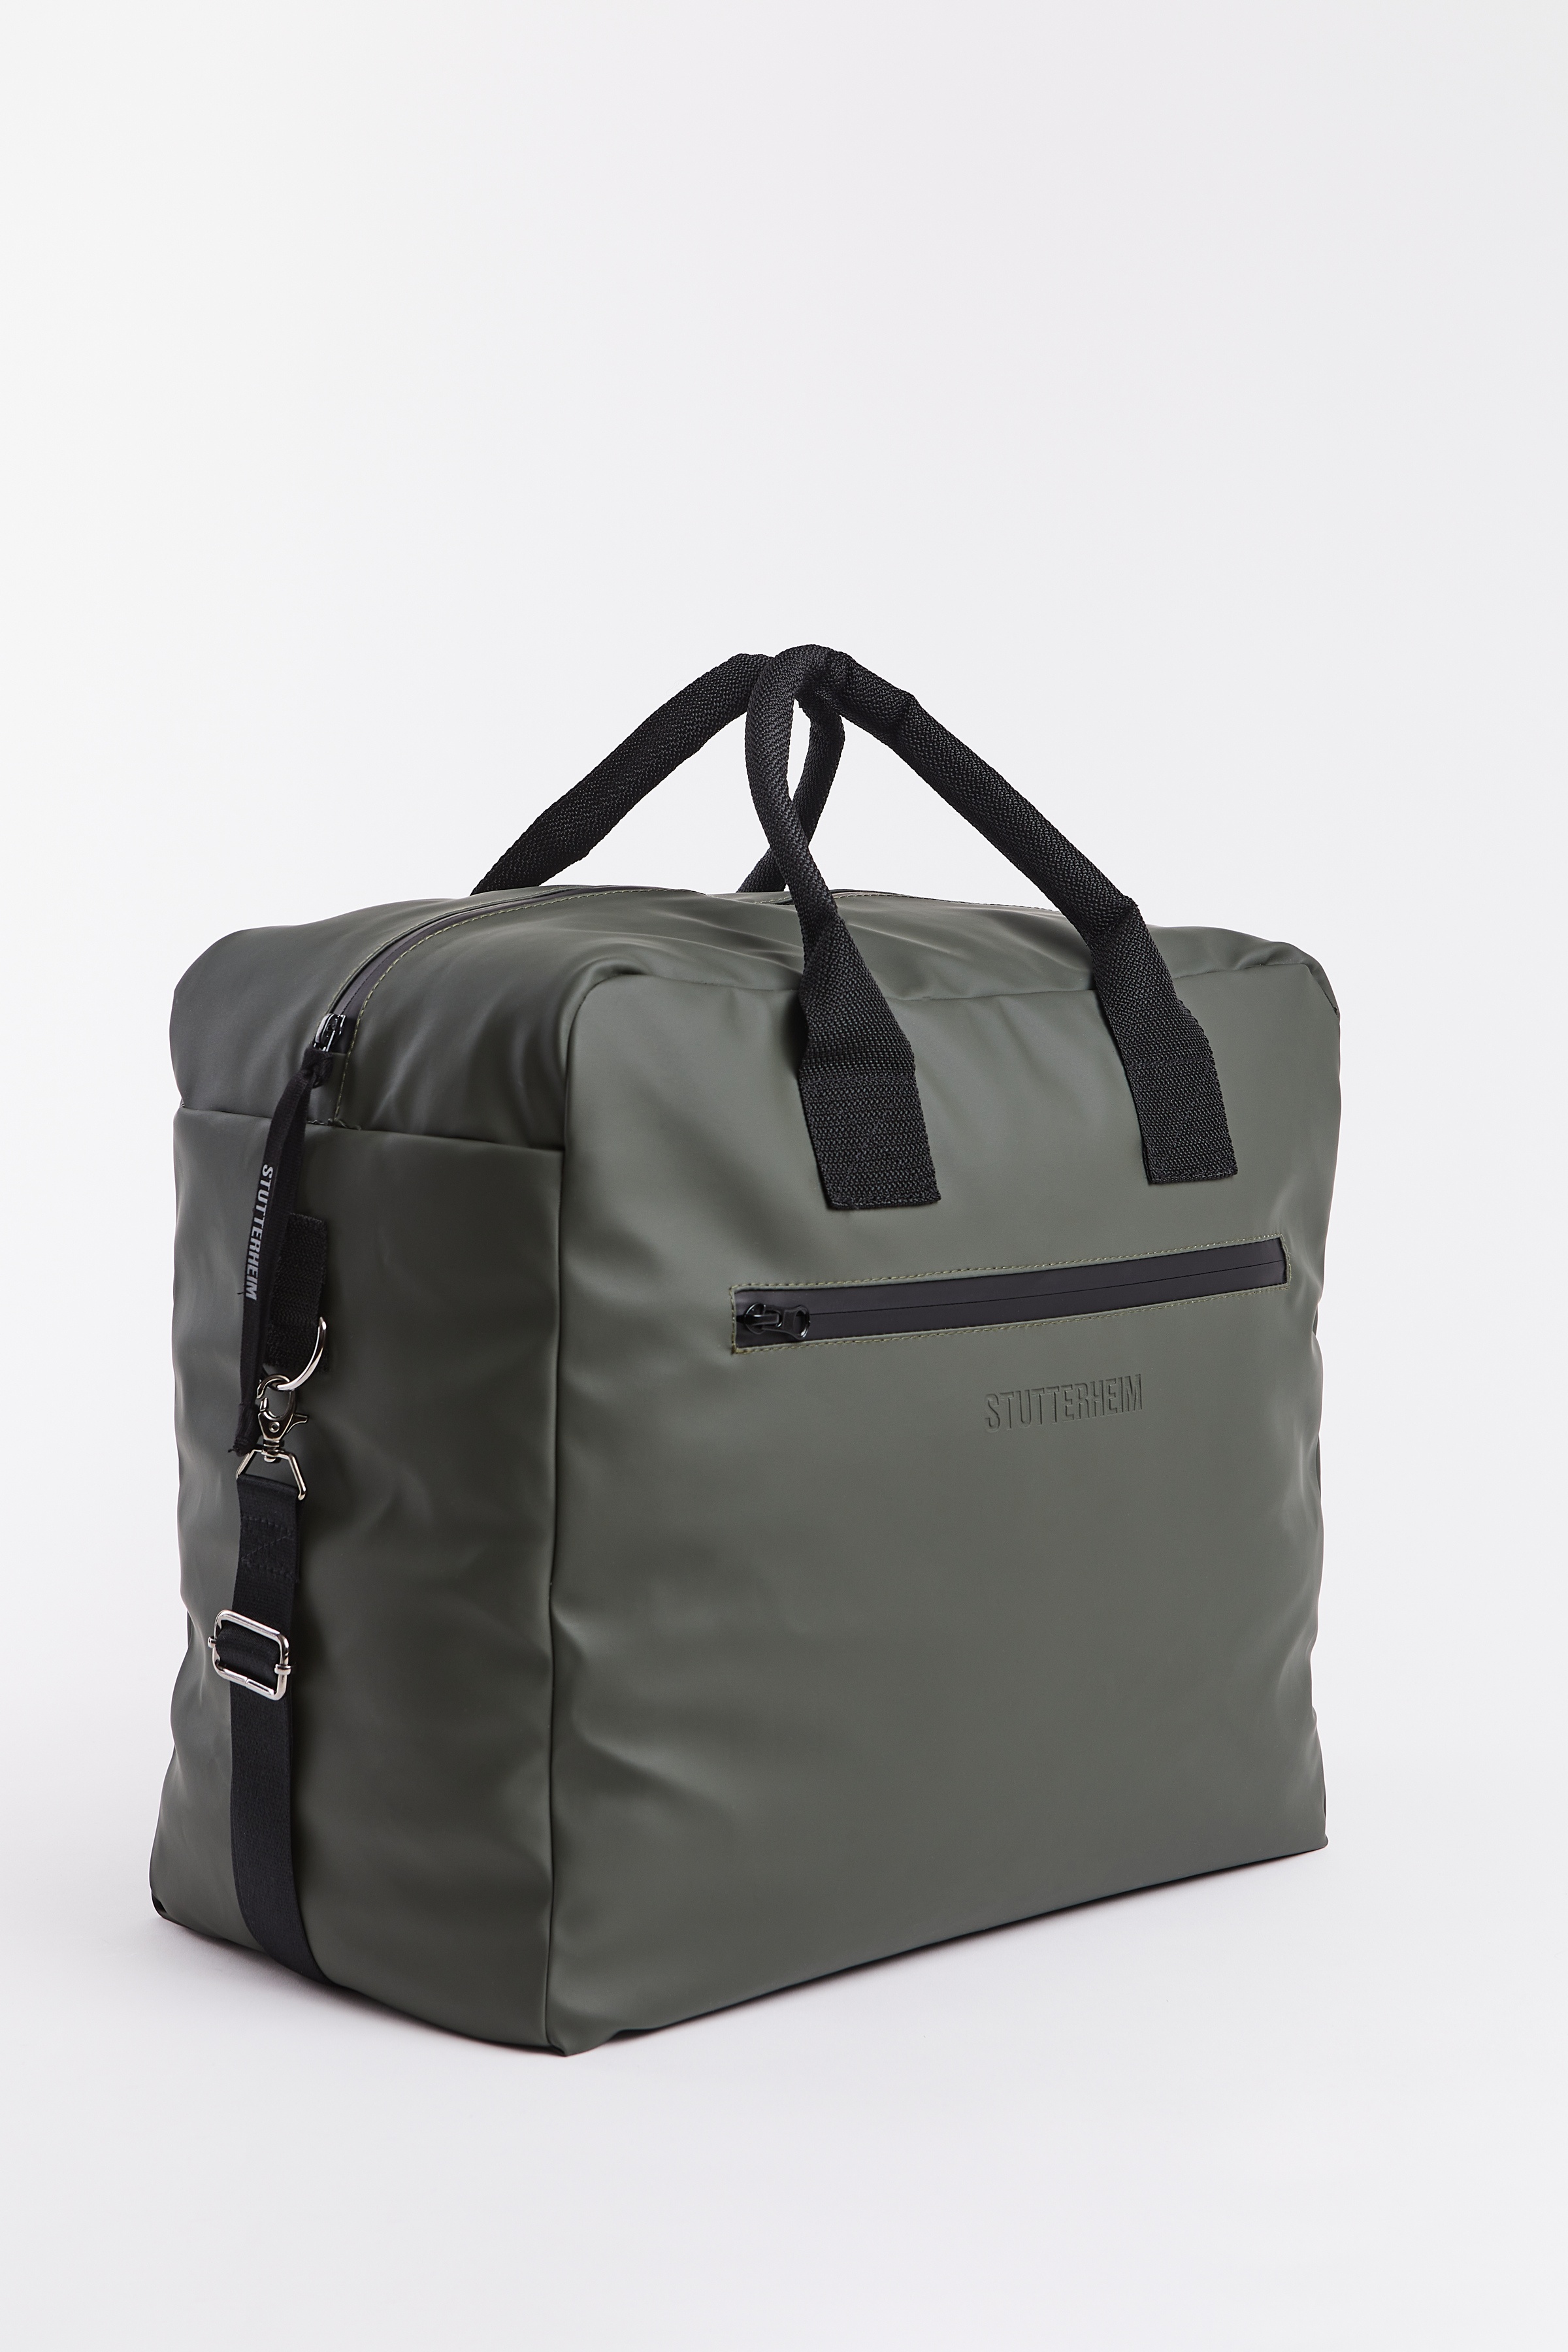 Svea Box Bag Green - 3